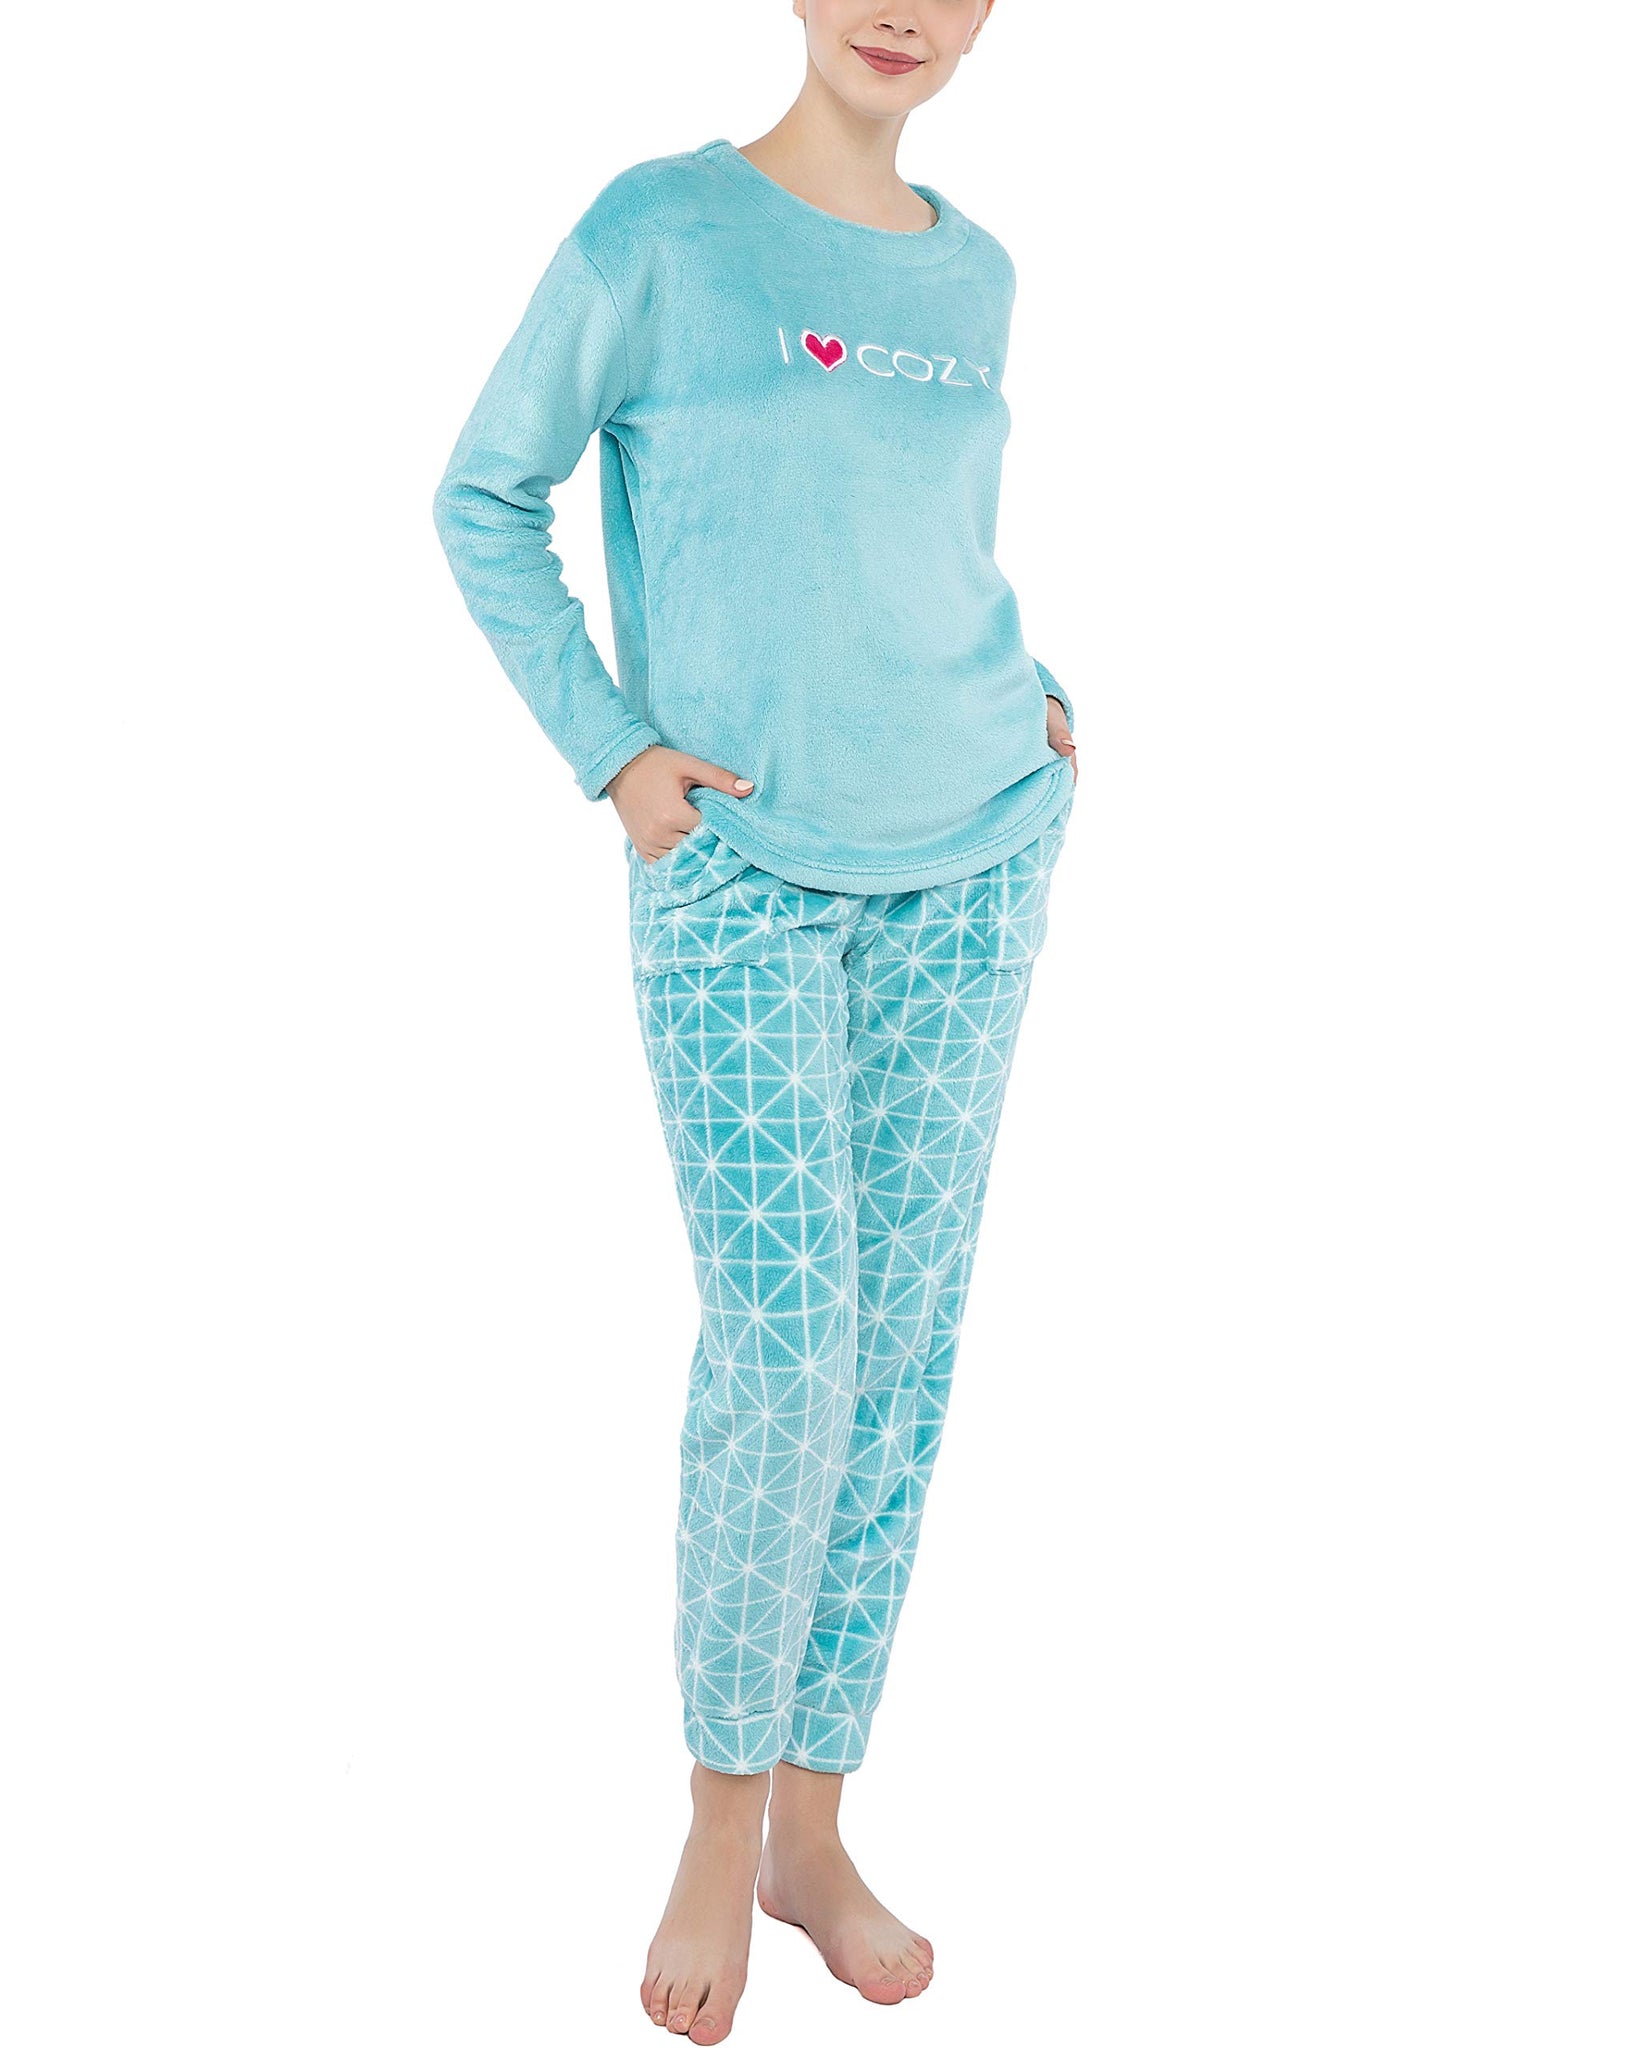 Fleece Pajamas for Women, Microfleece Pullover Sweater Top and Jogger Pants Pajama Set, Aqua Blue Small